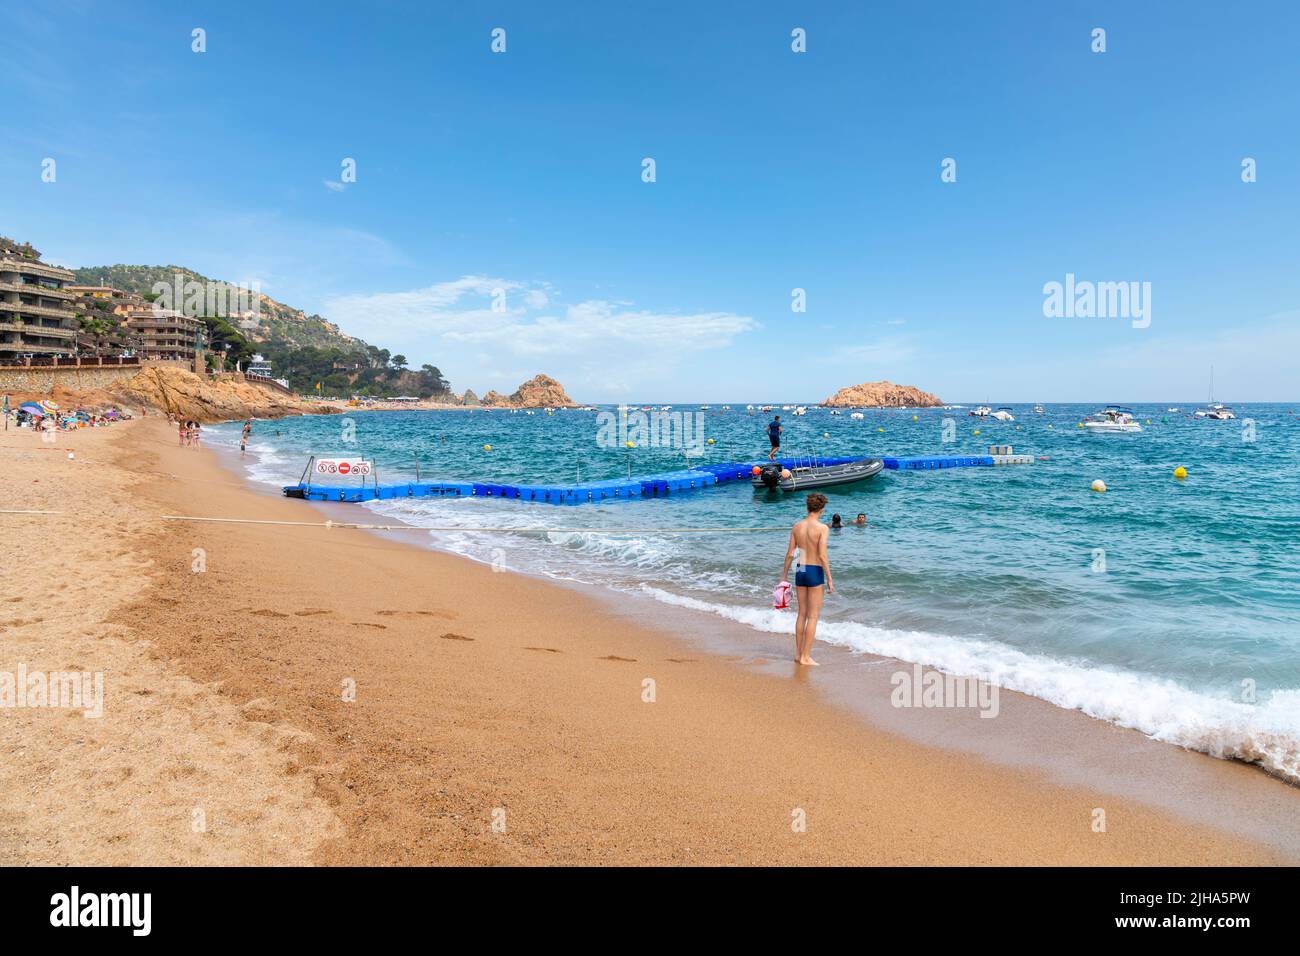 The sandy Platja Gran beach at the resort town of Tossa de Mar, Spain, on the Costa Brava coast of the Mediterranean Sea. Stock Photo